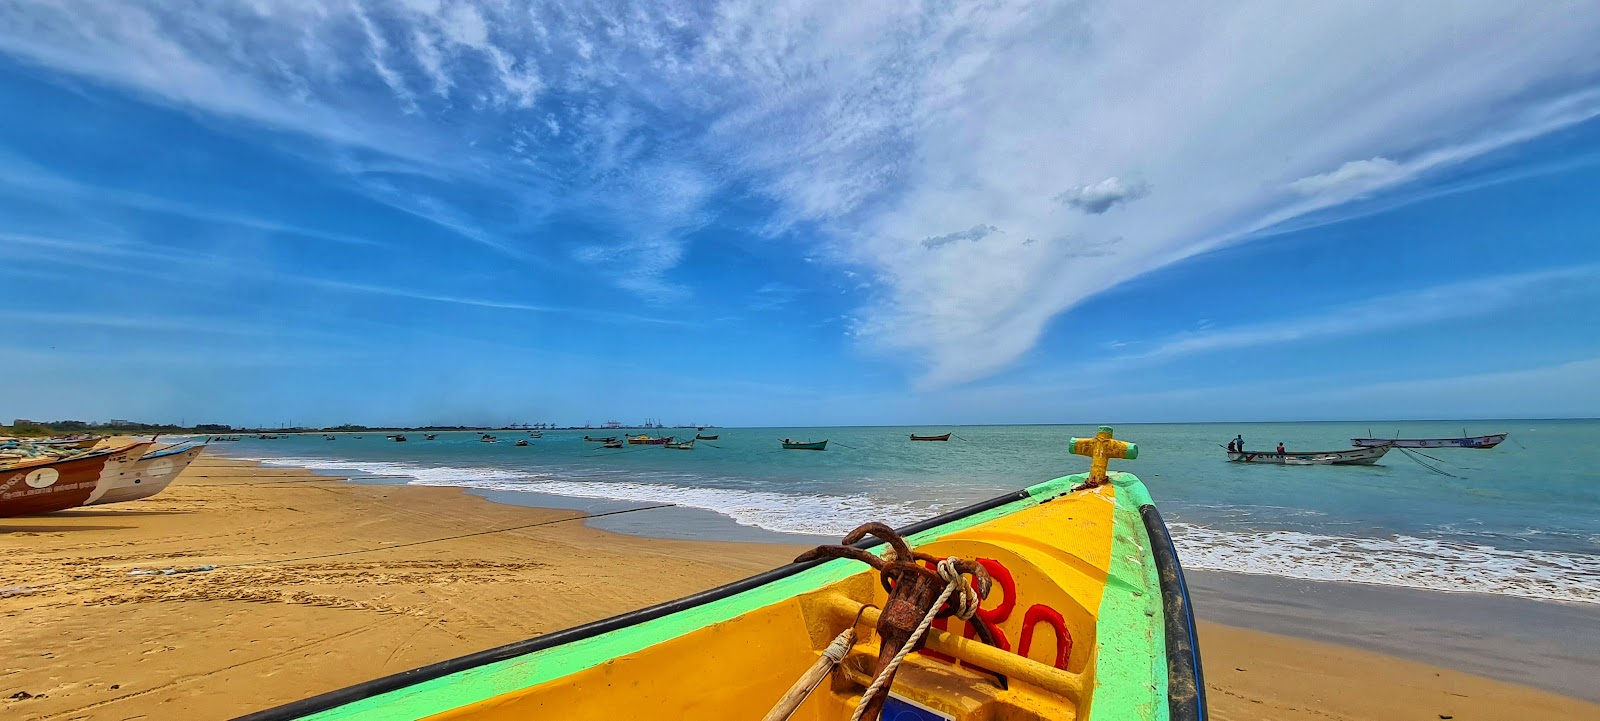 Foto de Thoothukudi Beach con recta y larga